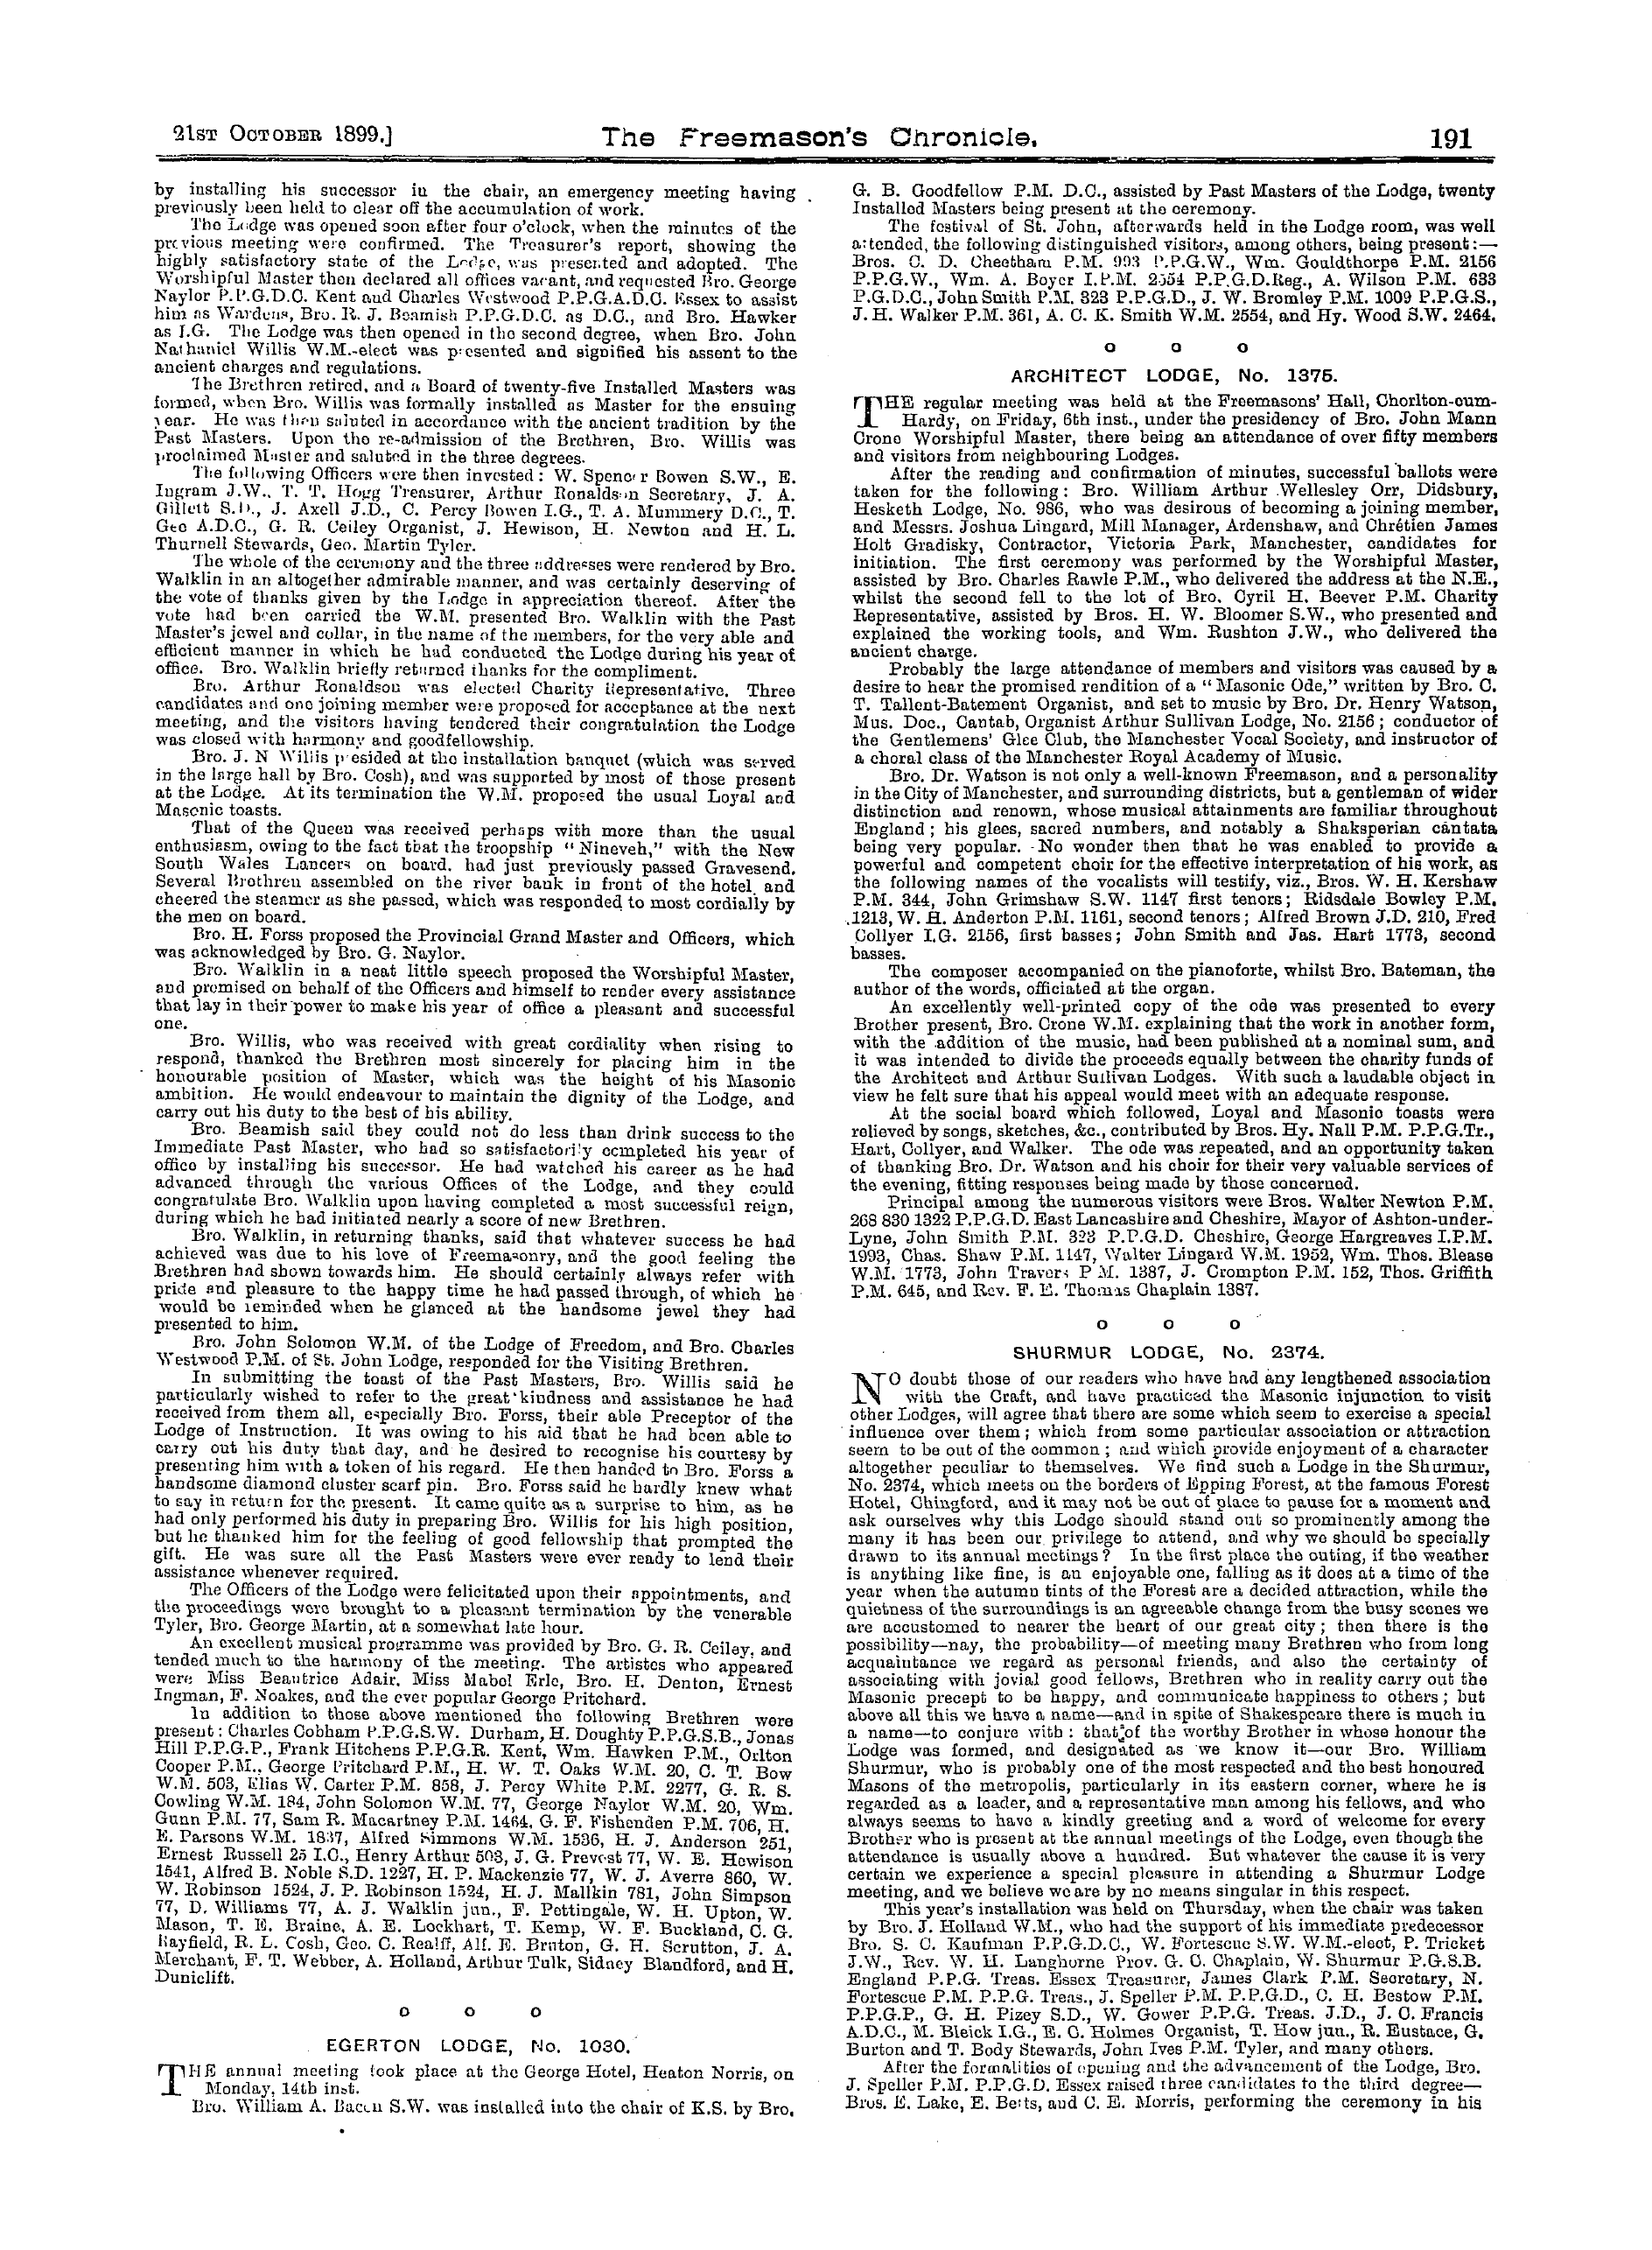 The Freemason's Chronicle: 1899-10-21: 11